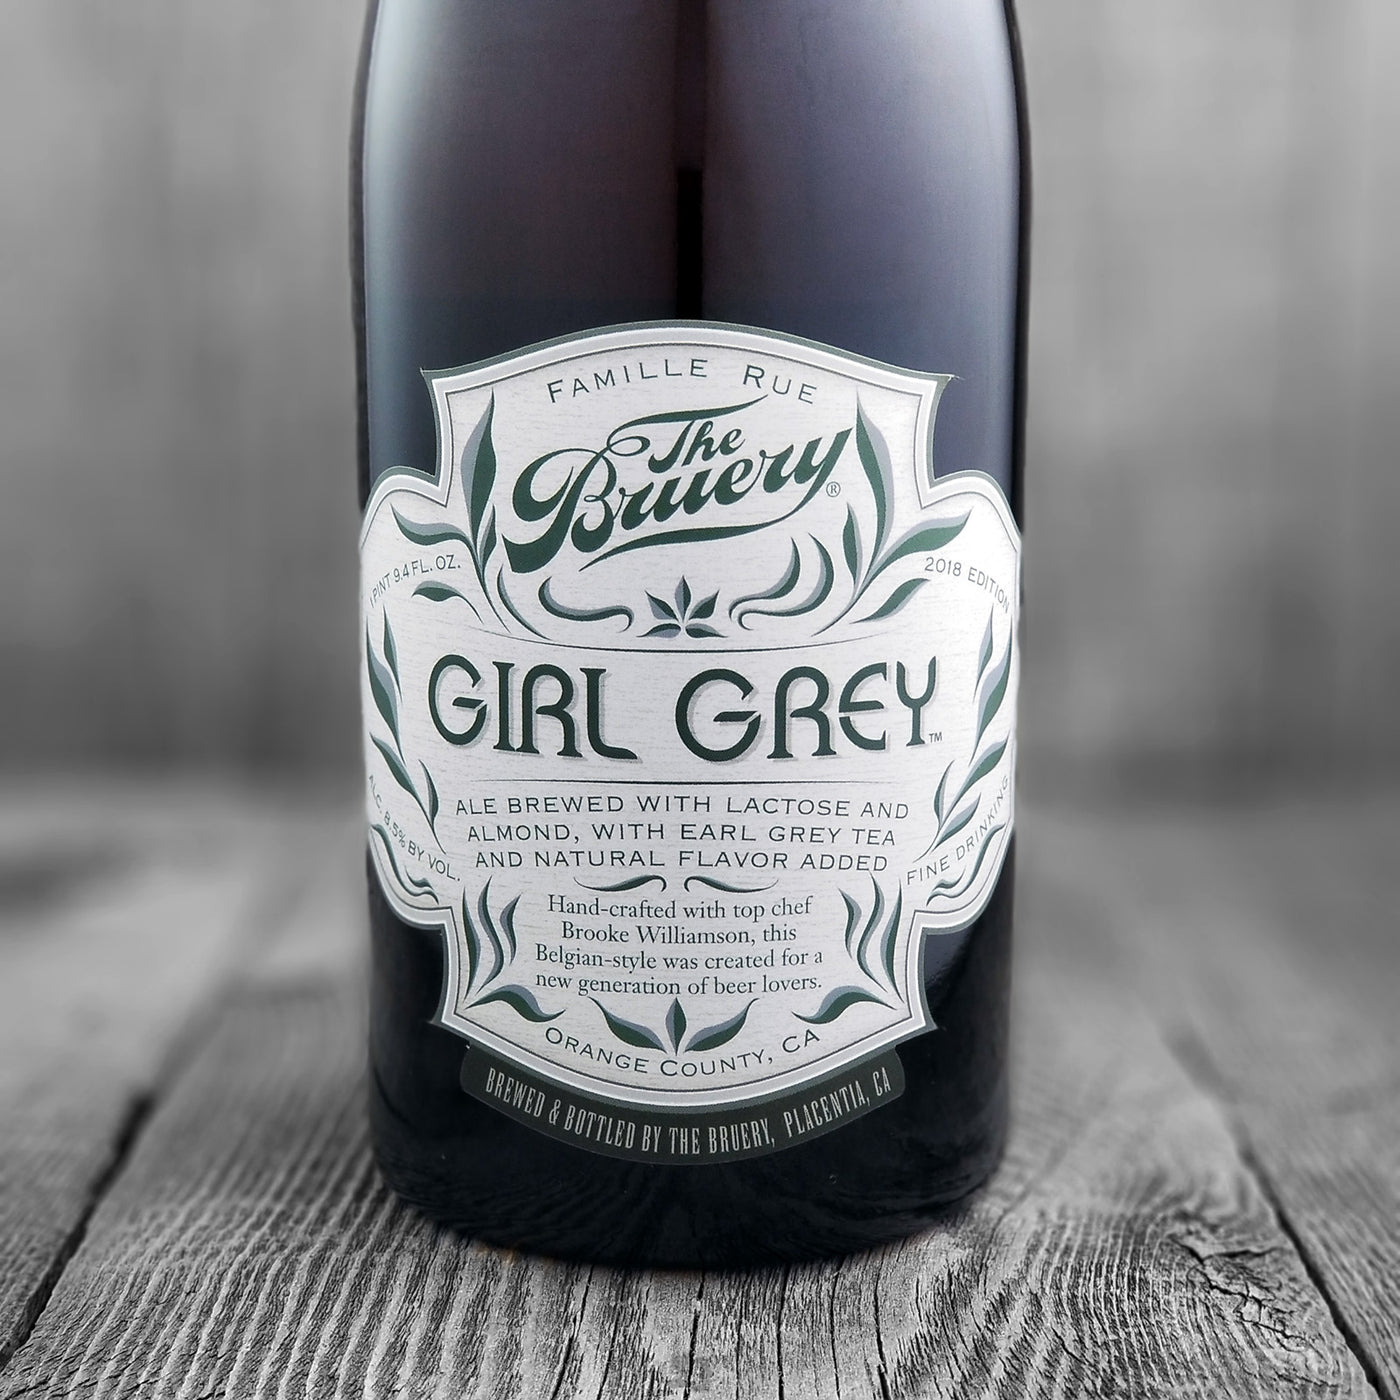 The Bruery Girl Grey